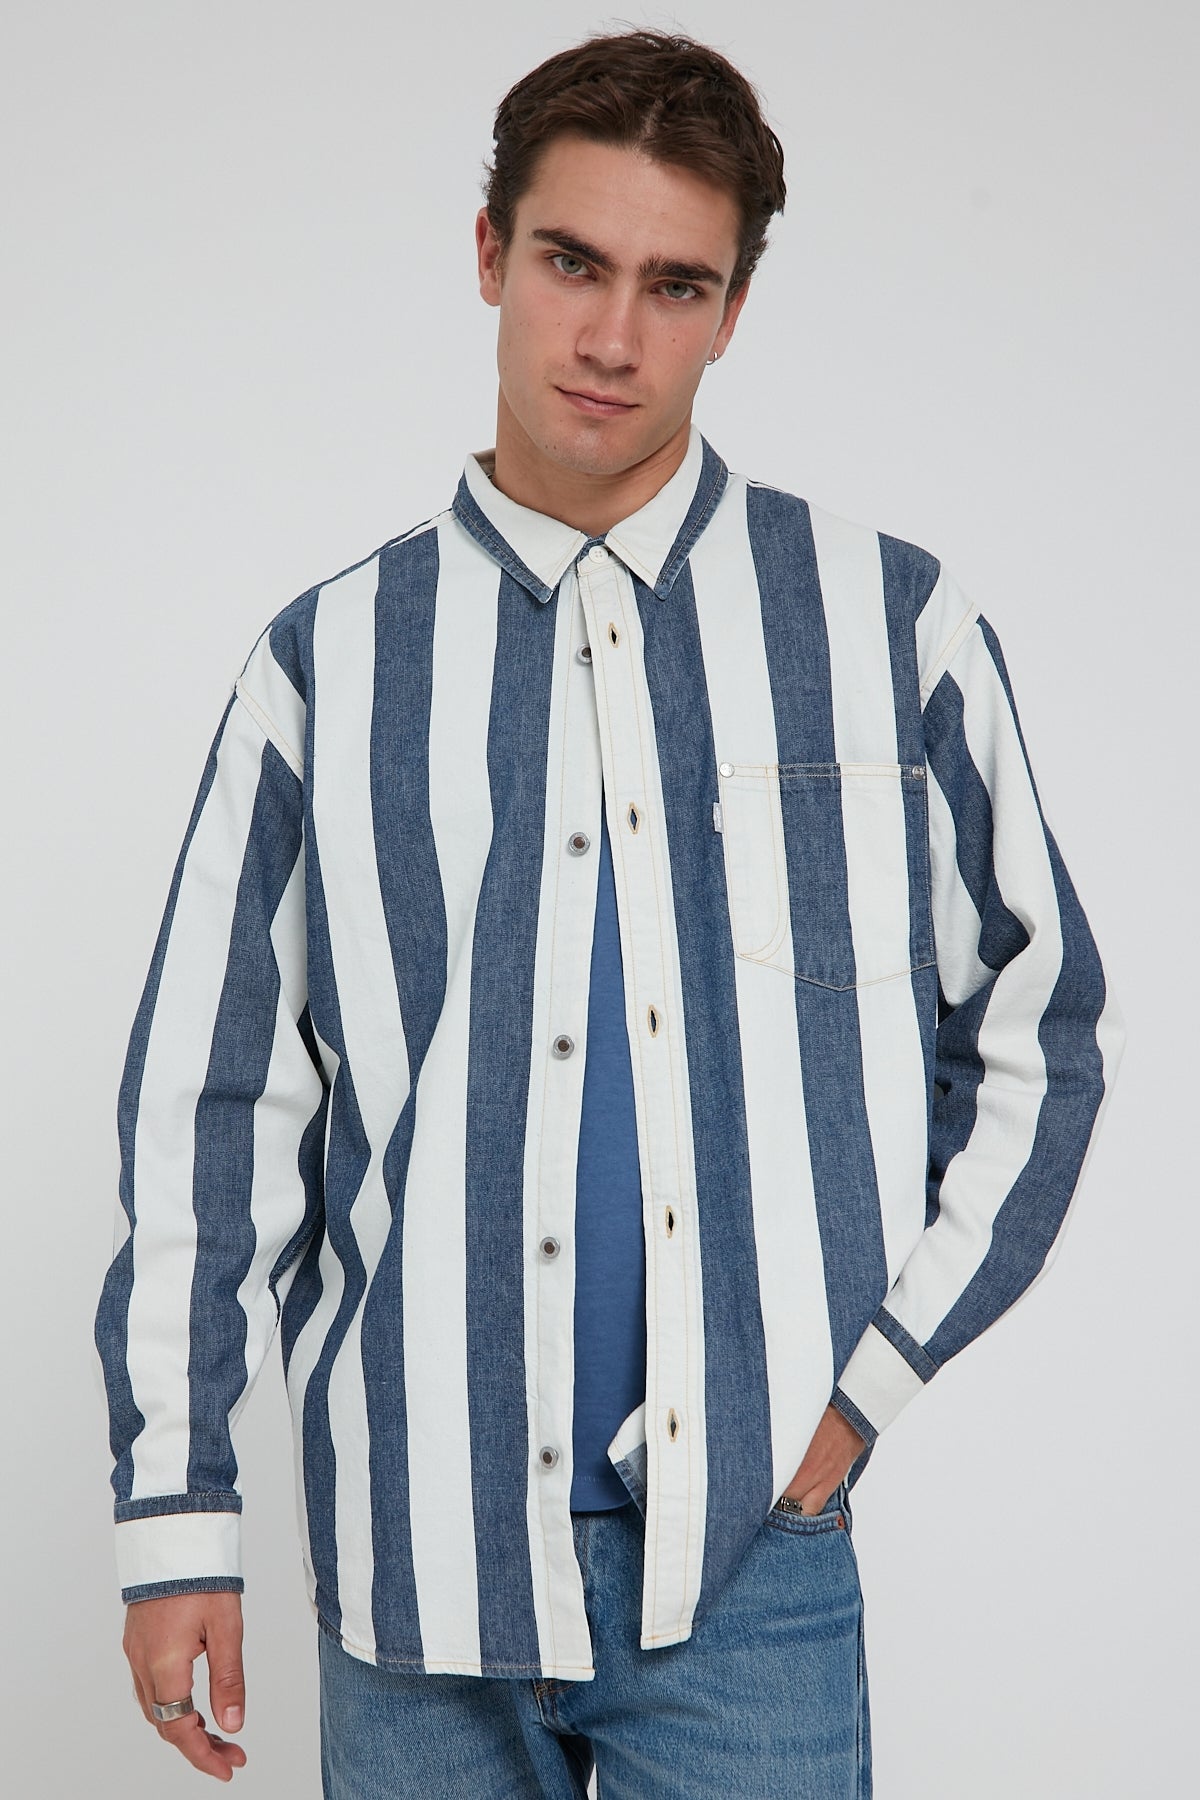 Levi's Silvertab Oversize Shirt Blue Stripe